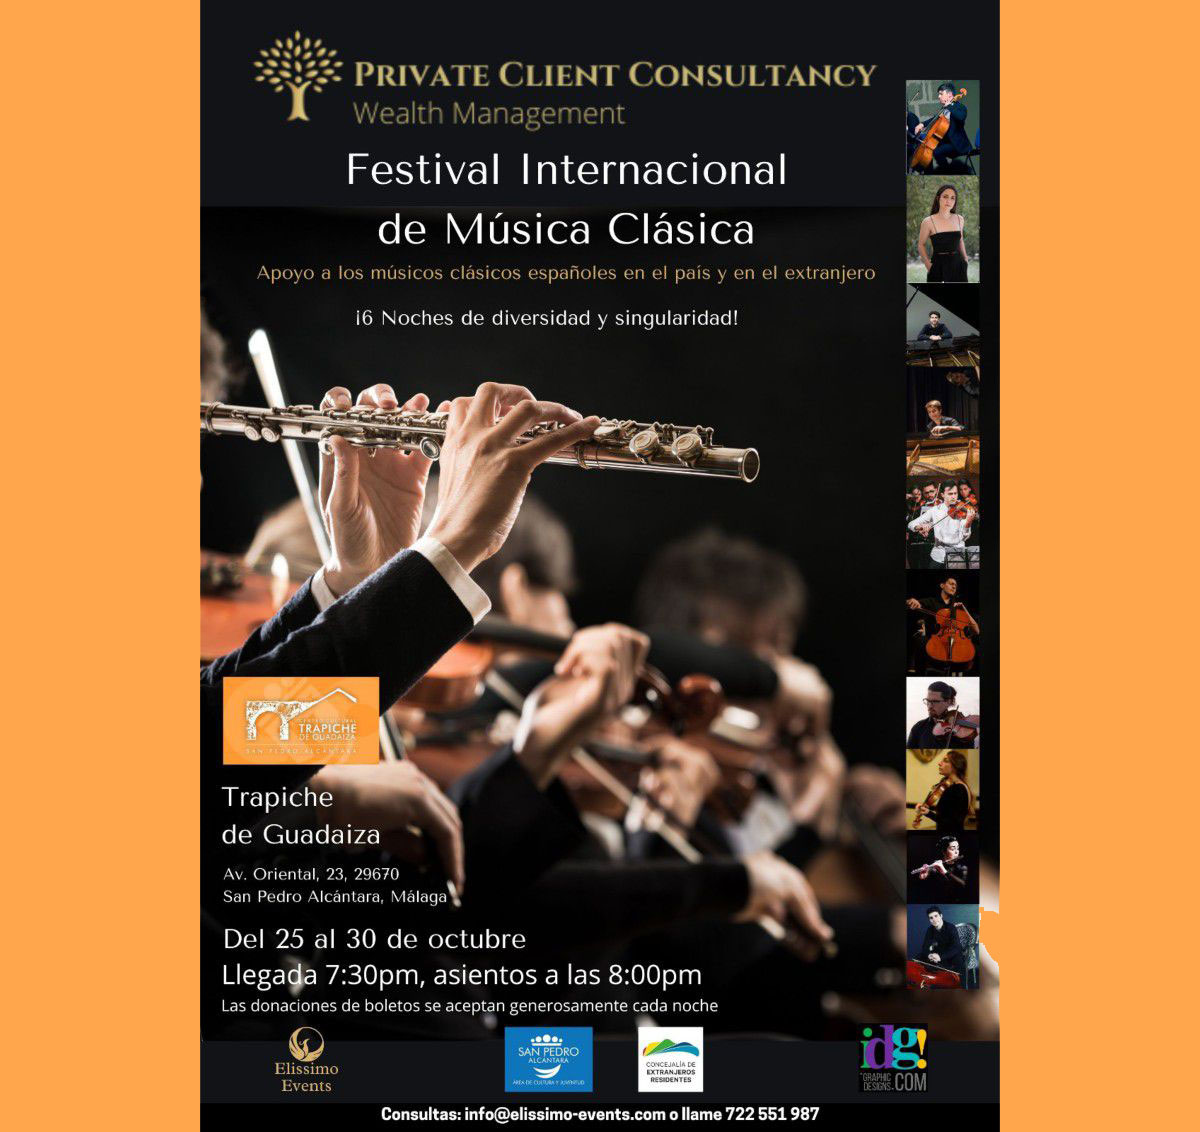 Poster for Festival Intenational de Musica Clasica